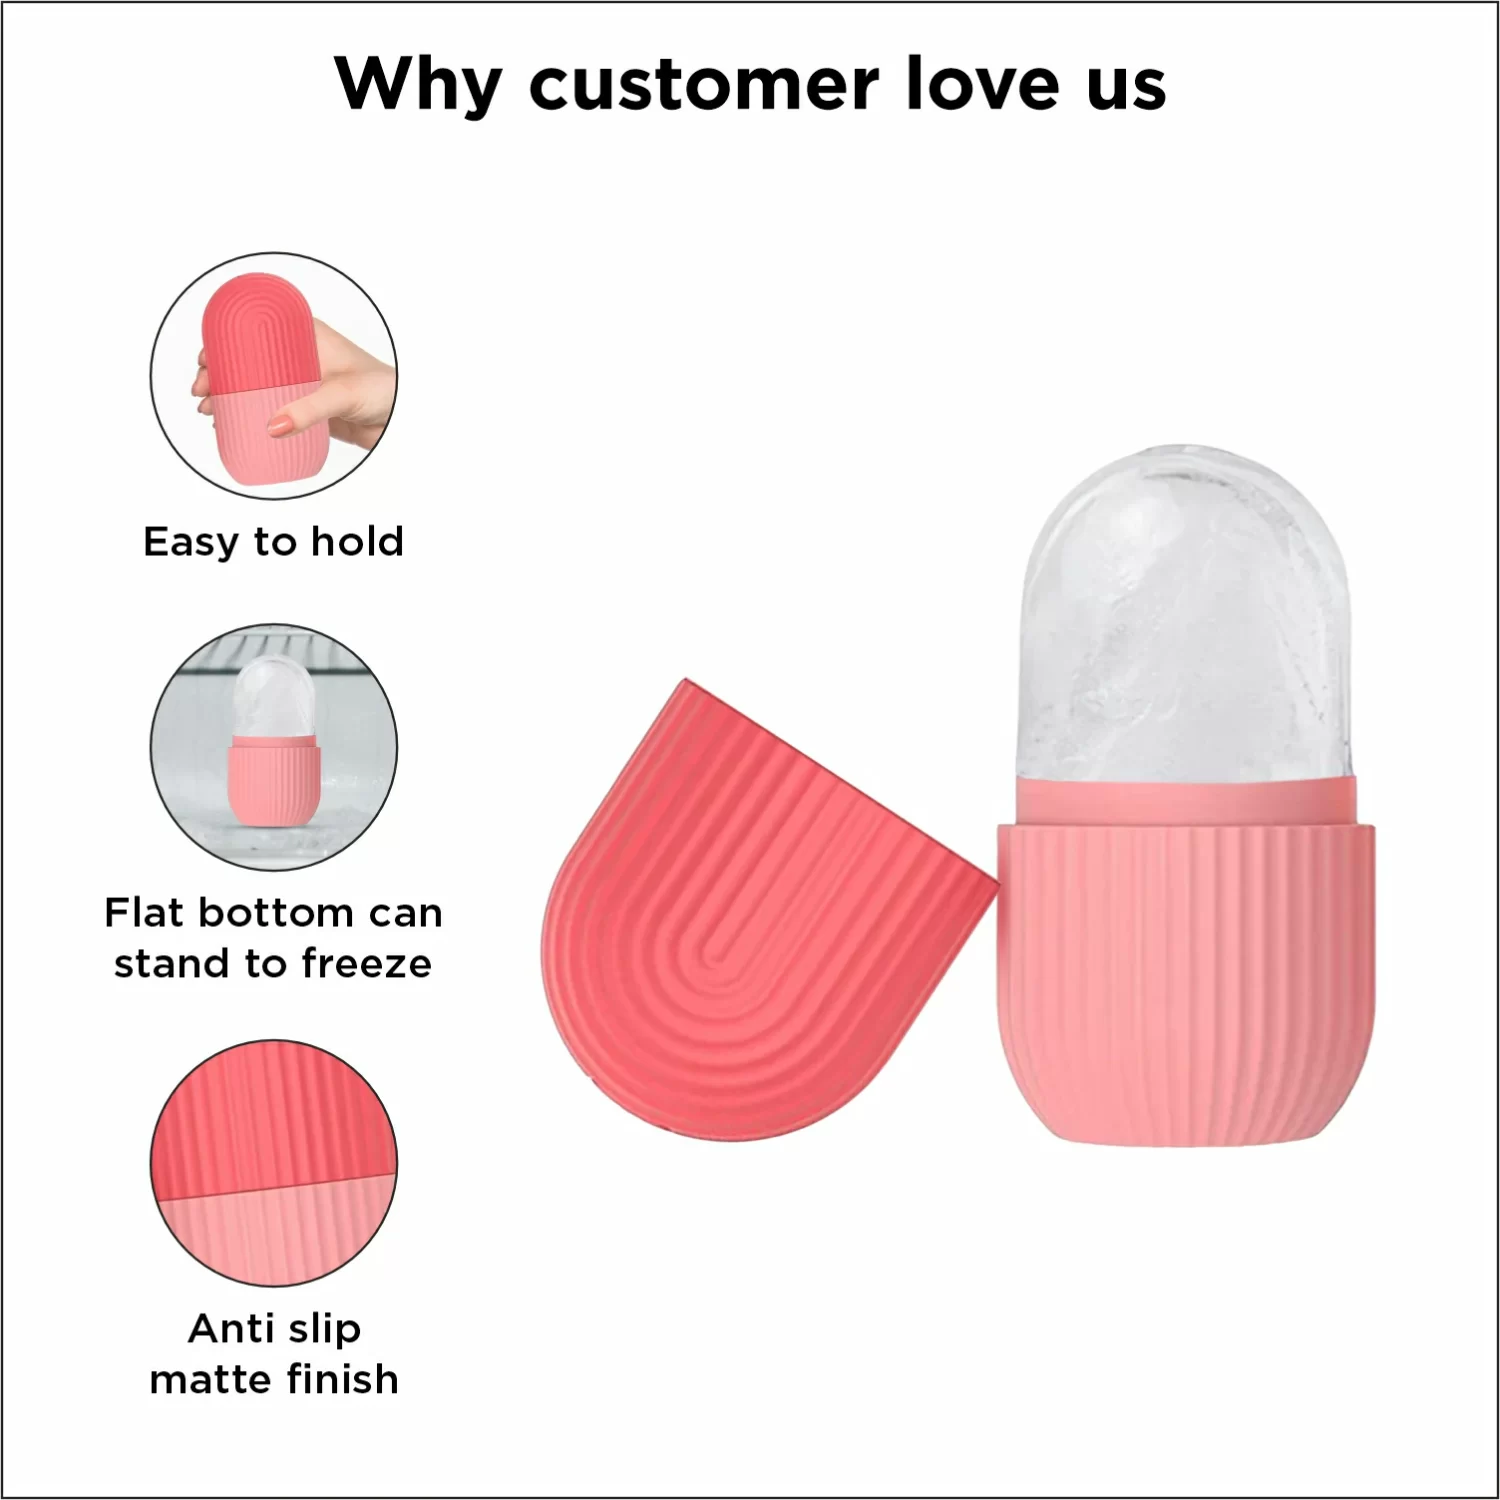 Why customer love us